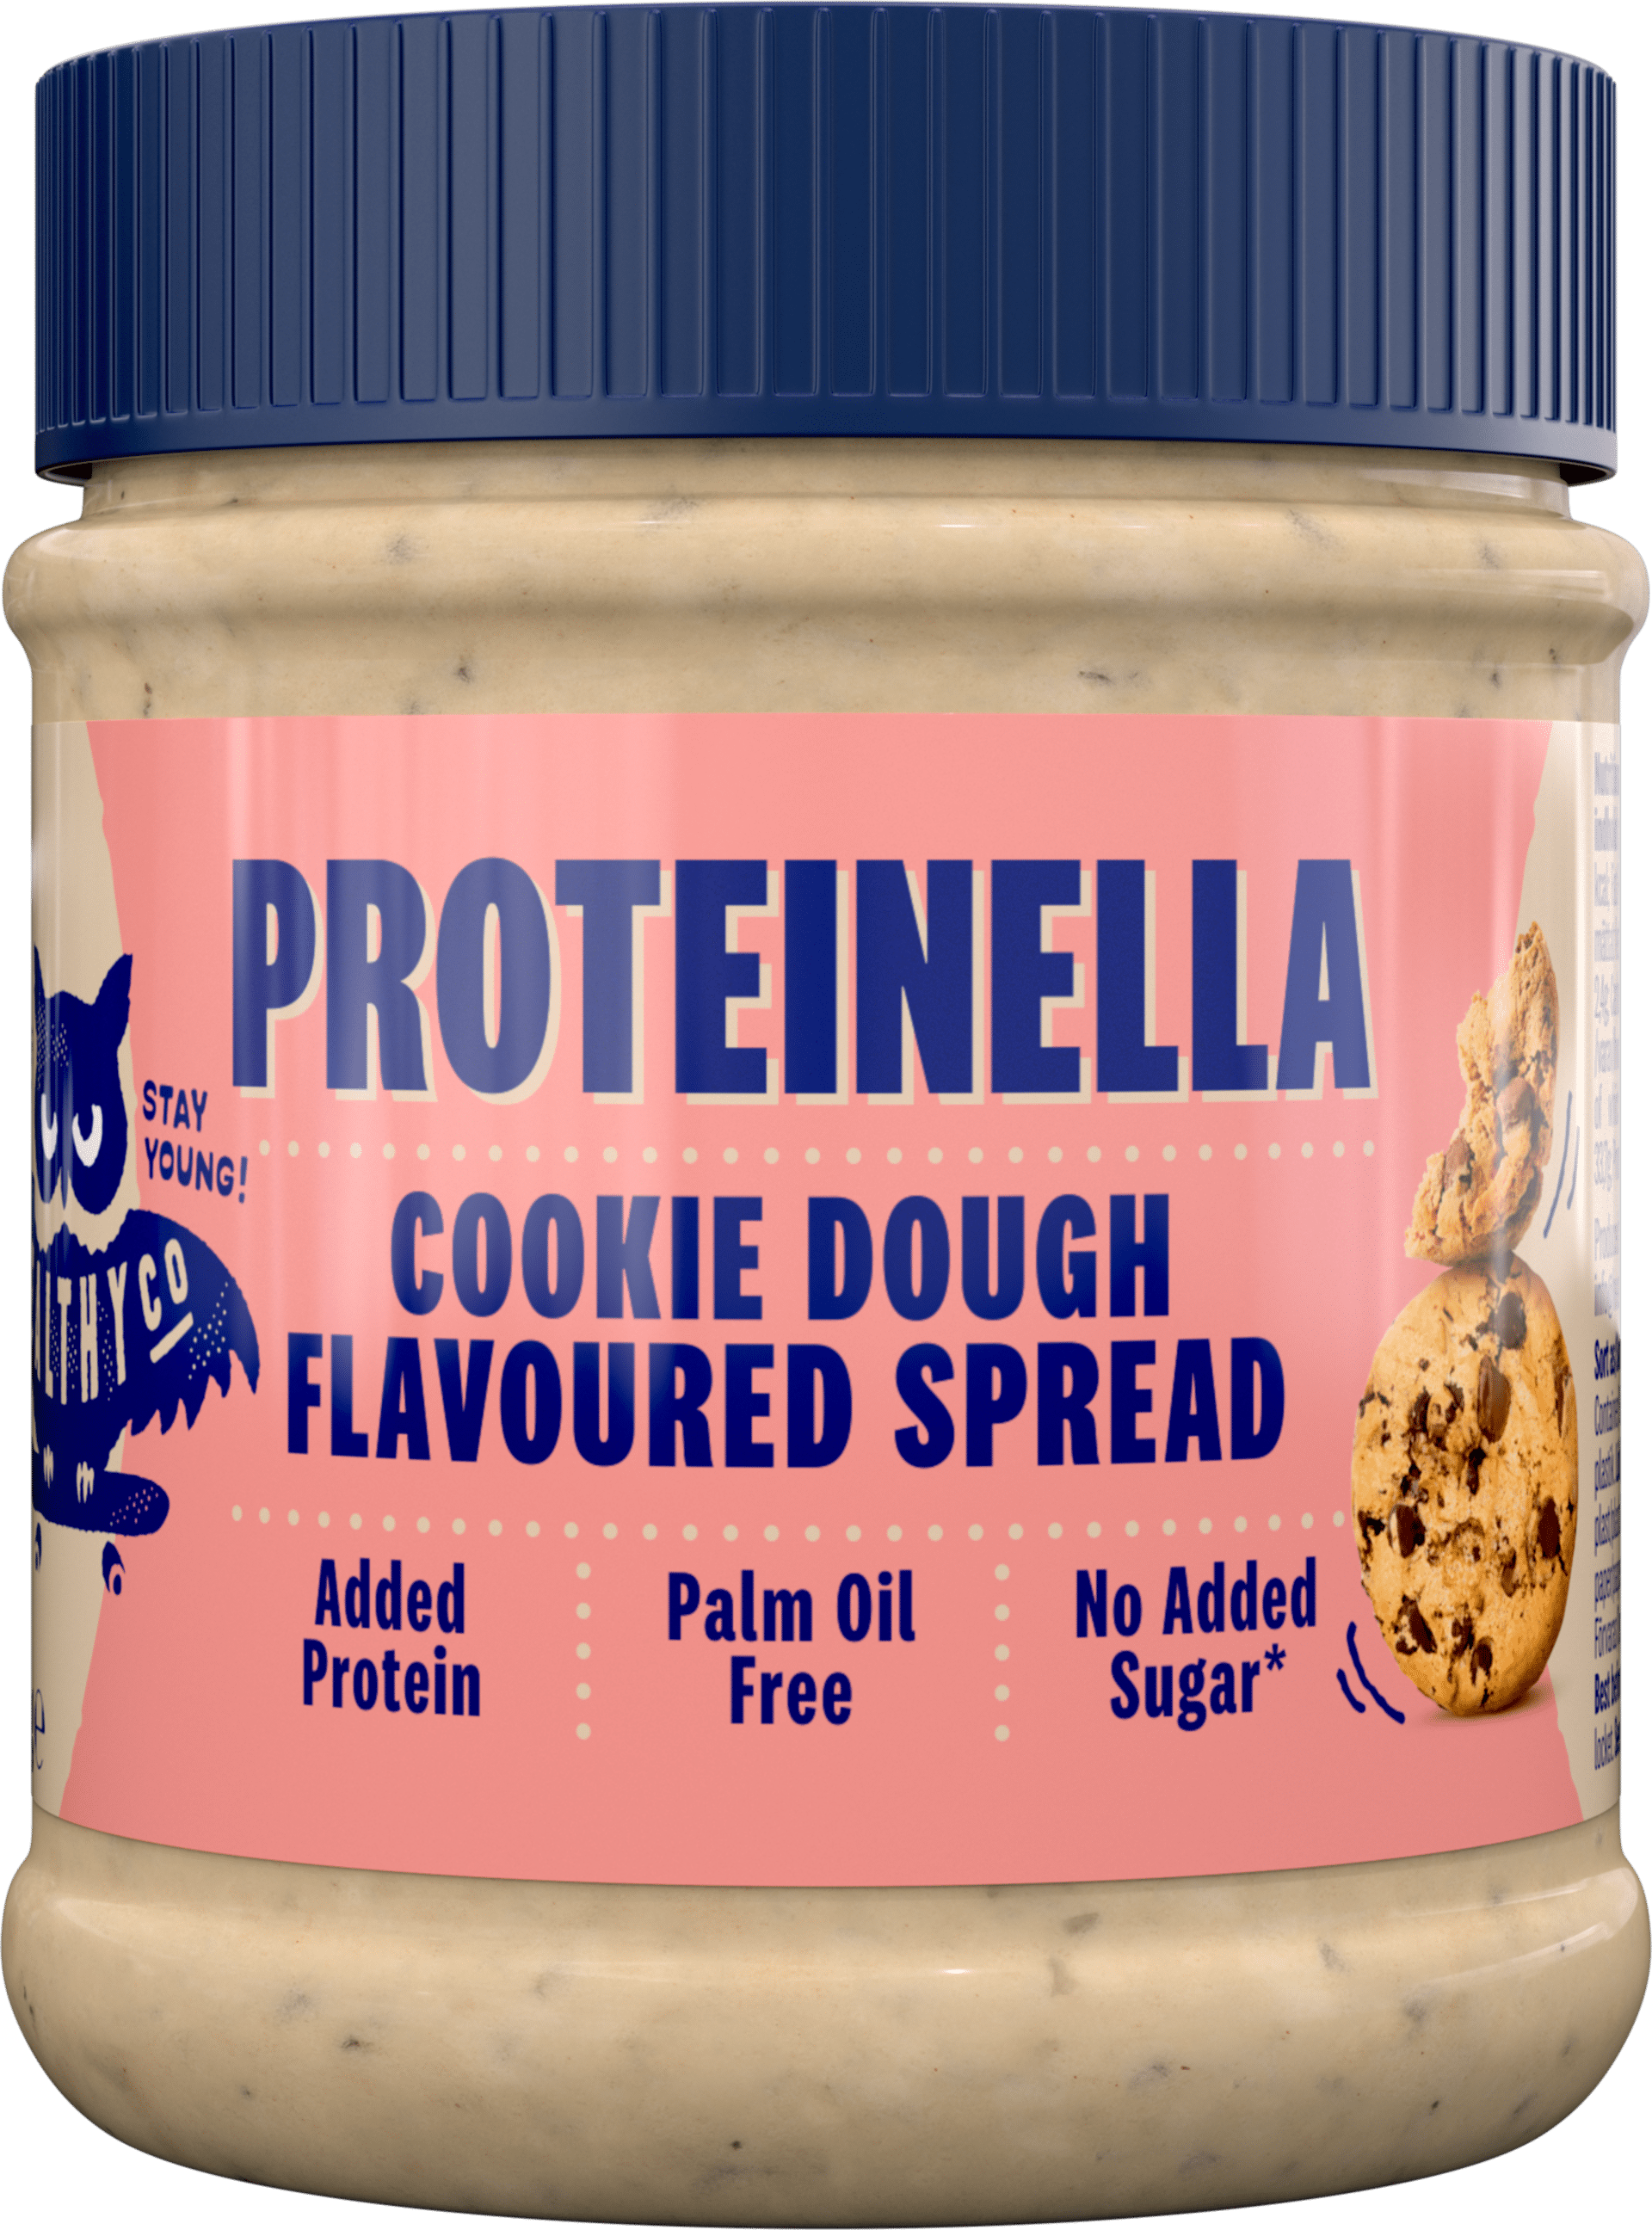 HealthyCo Proteinella Cookie dough 200 g